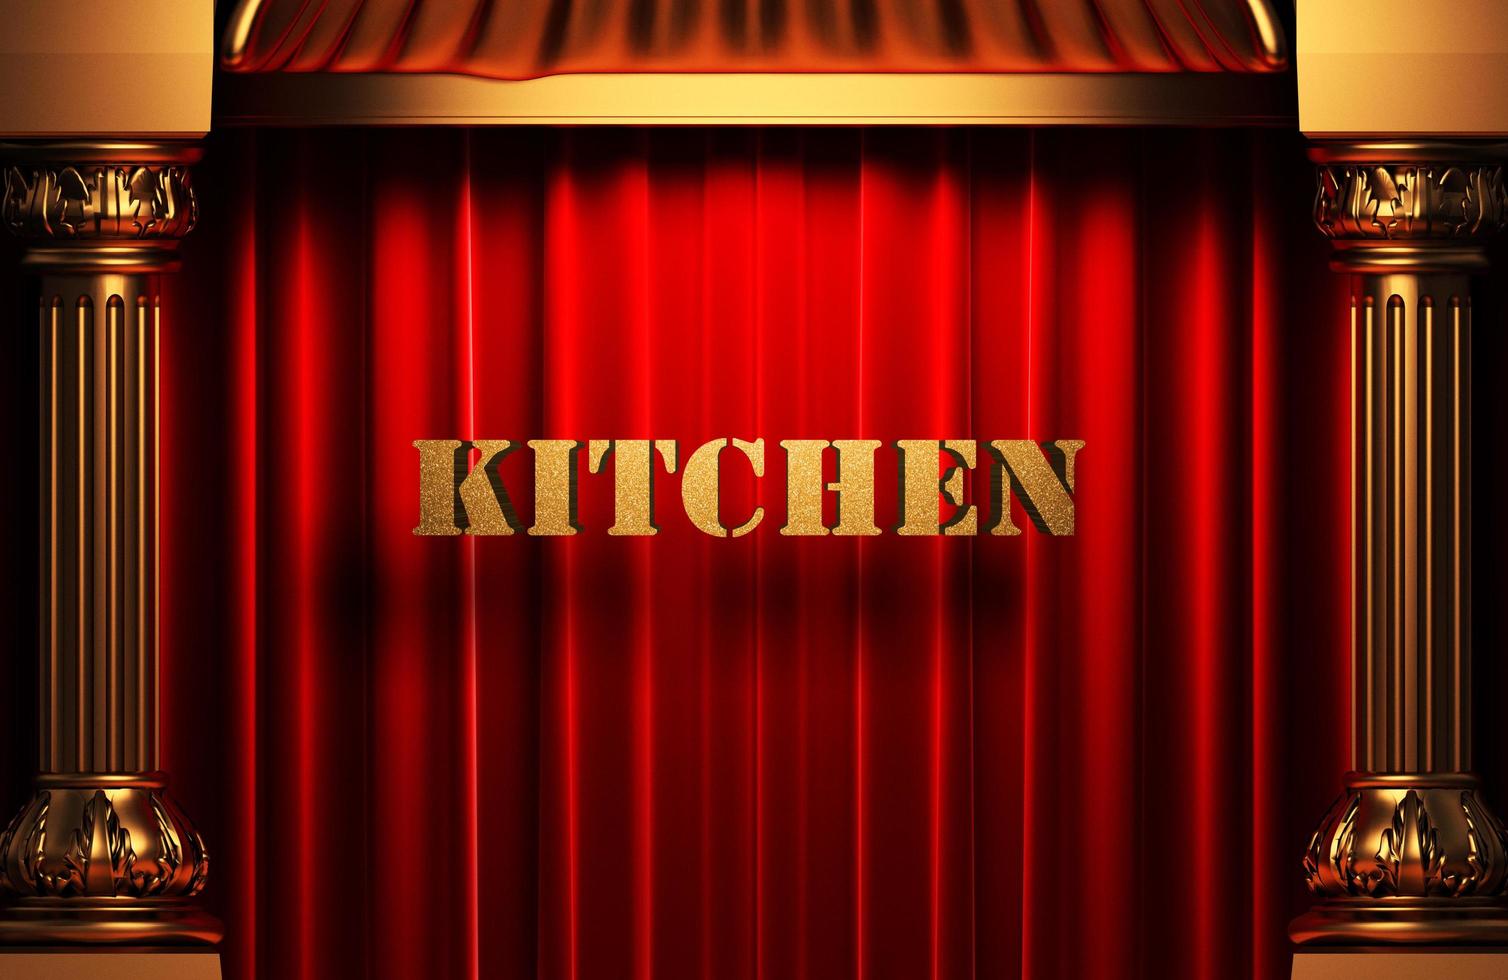 cocina palabra dorada en cortina roja foto